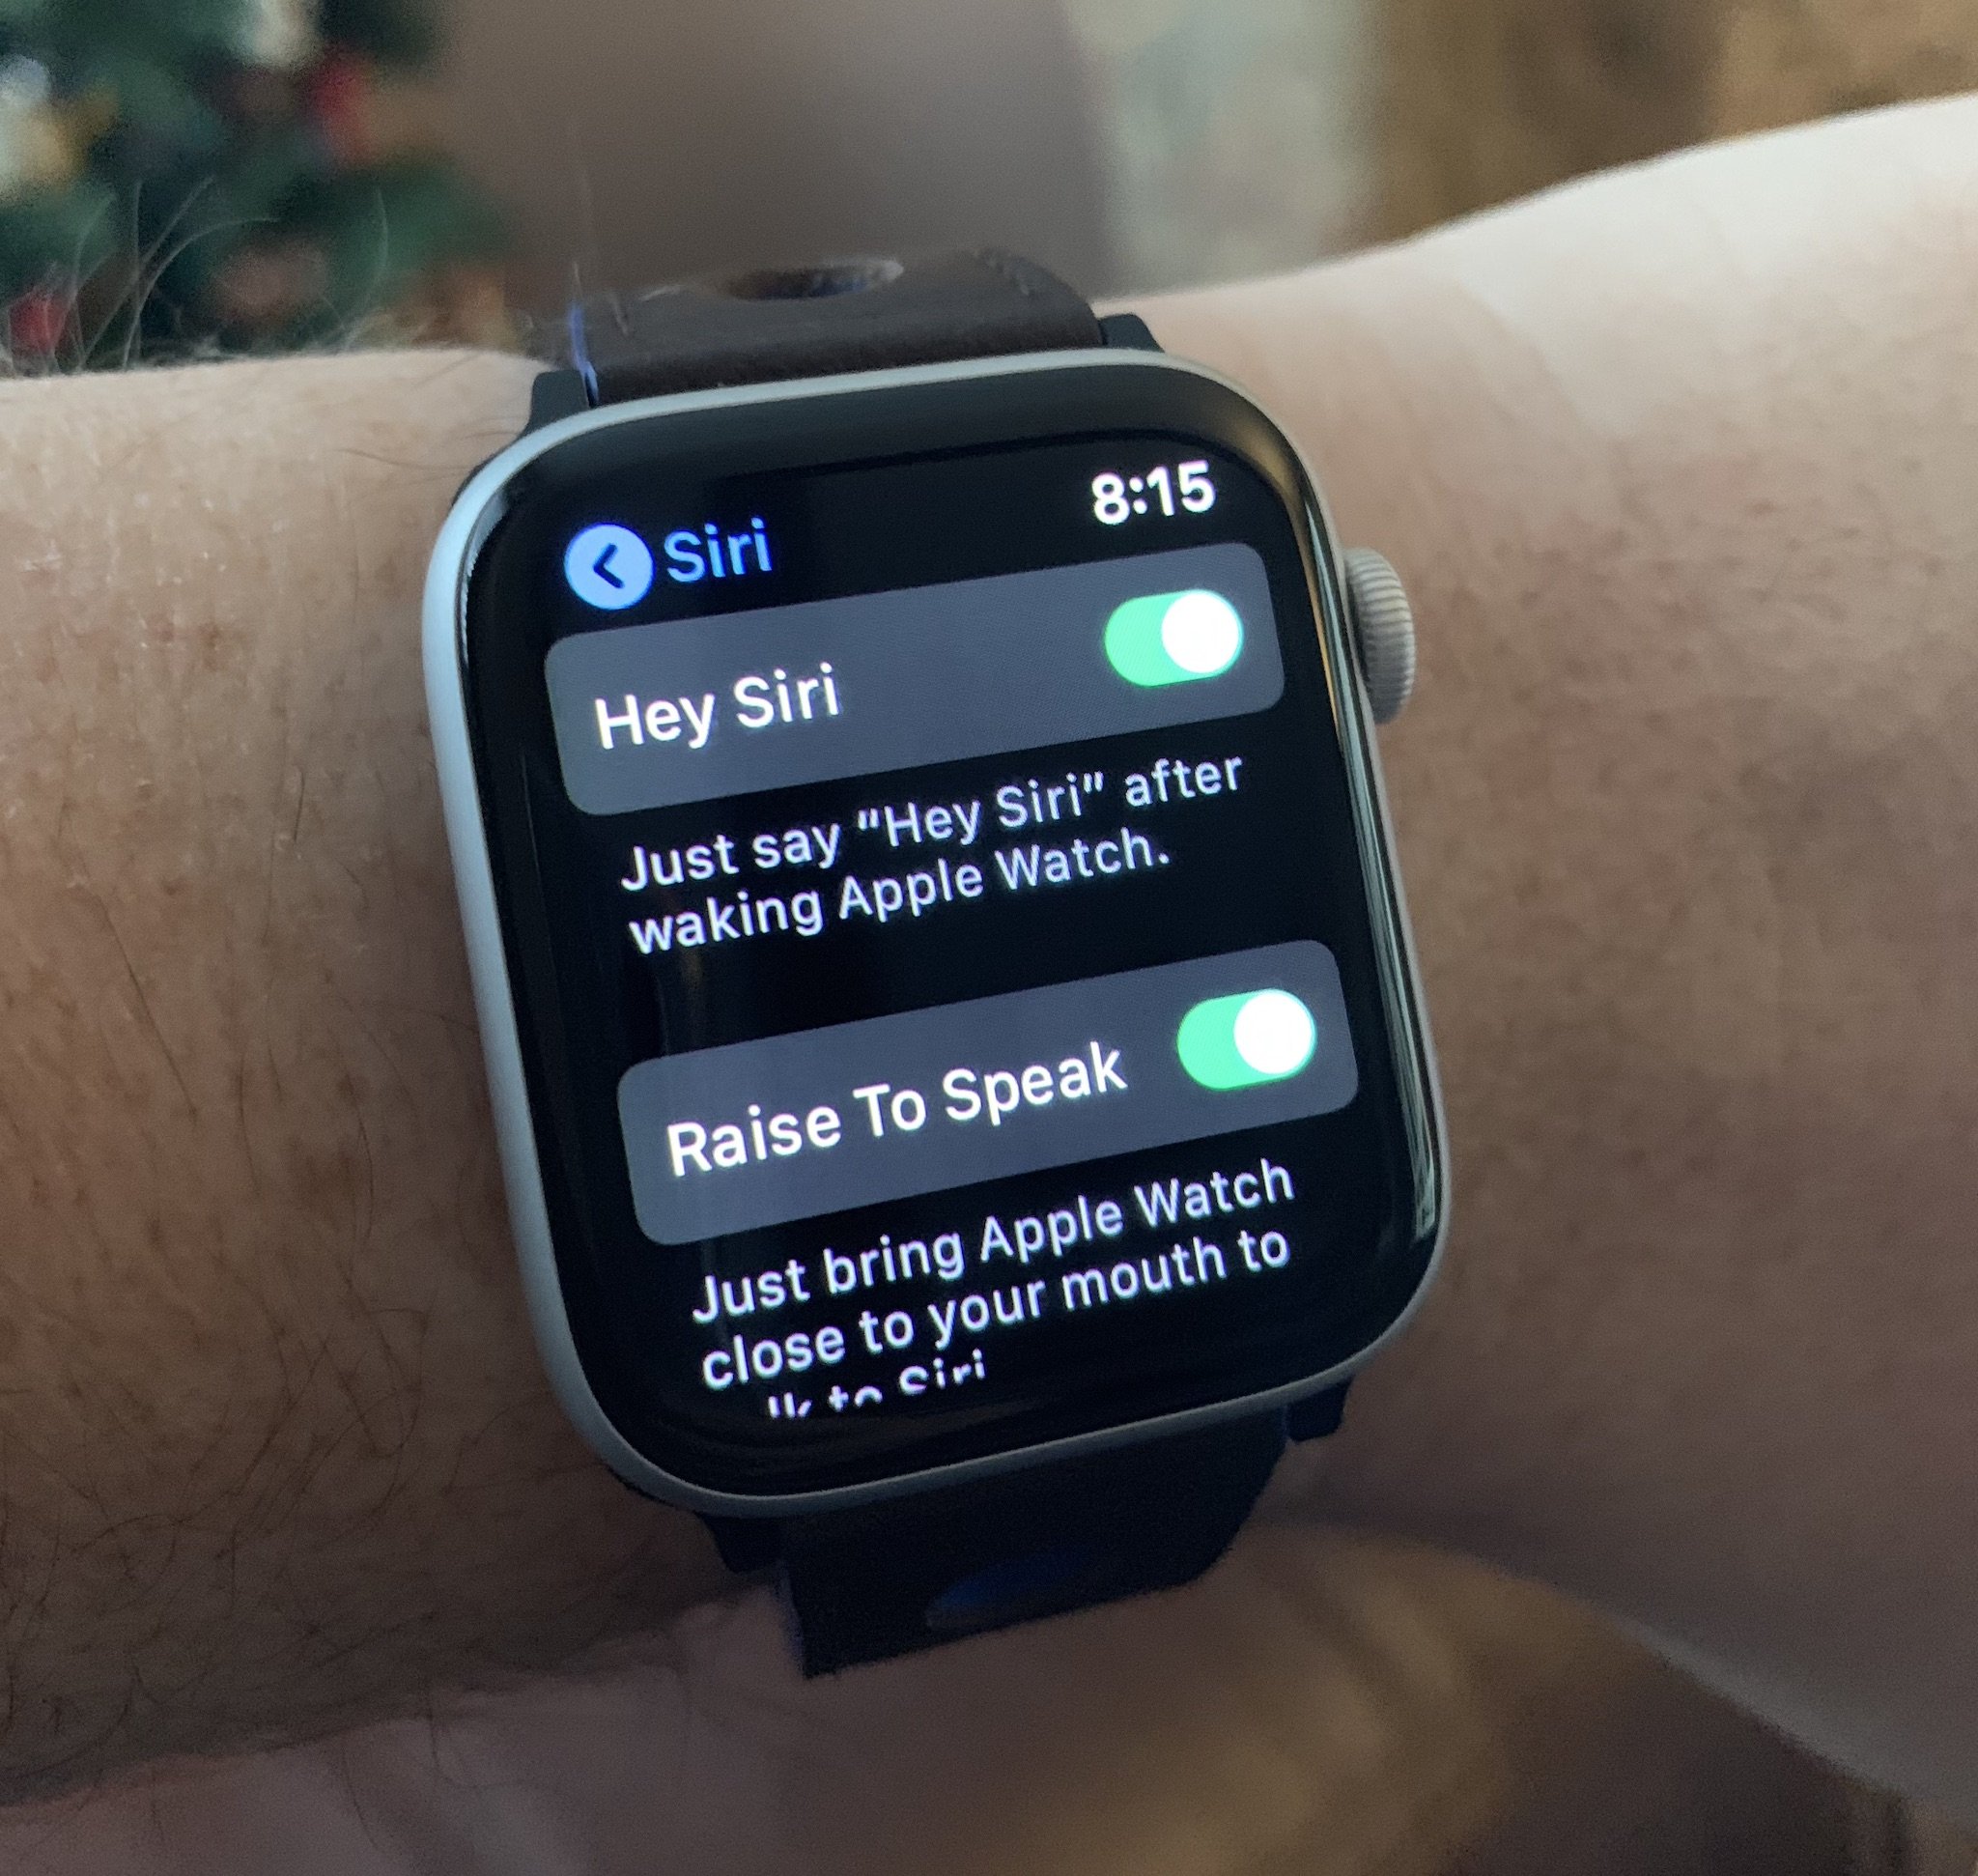 Apple Watch raise to speak